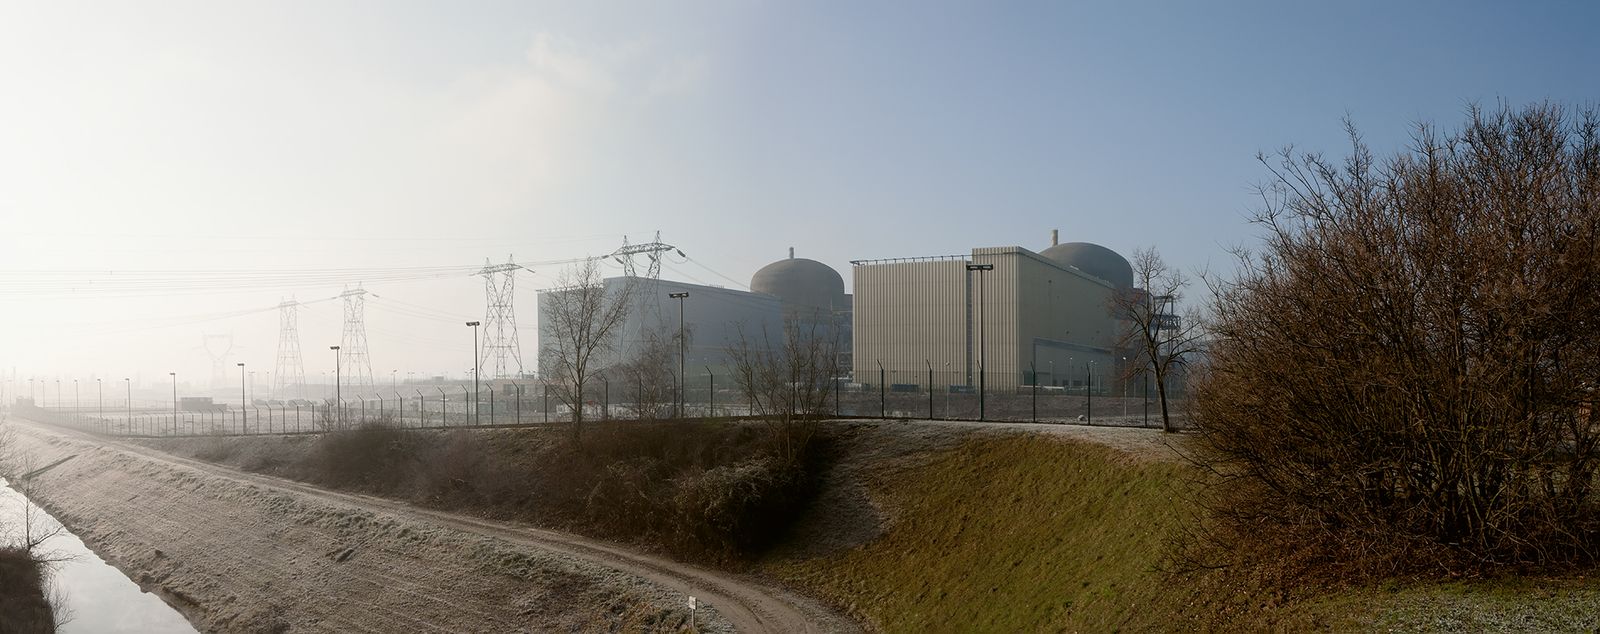 © Marco Caterini - Saint-Alban Nuclear Power Station, Saint-Alban, France 2012